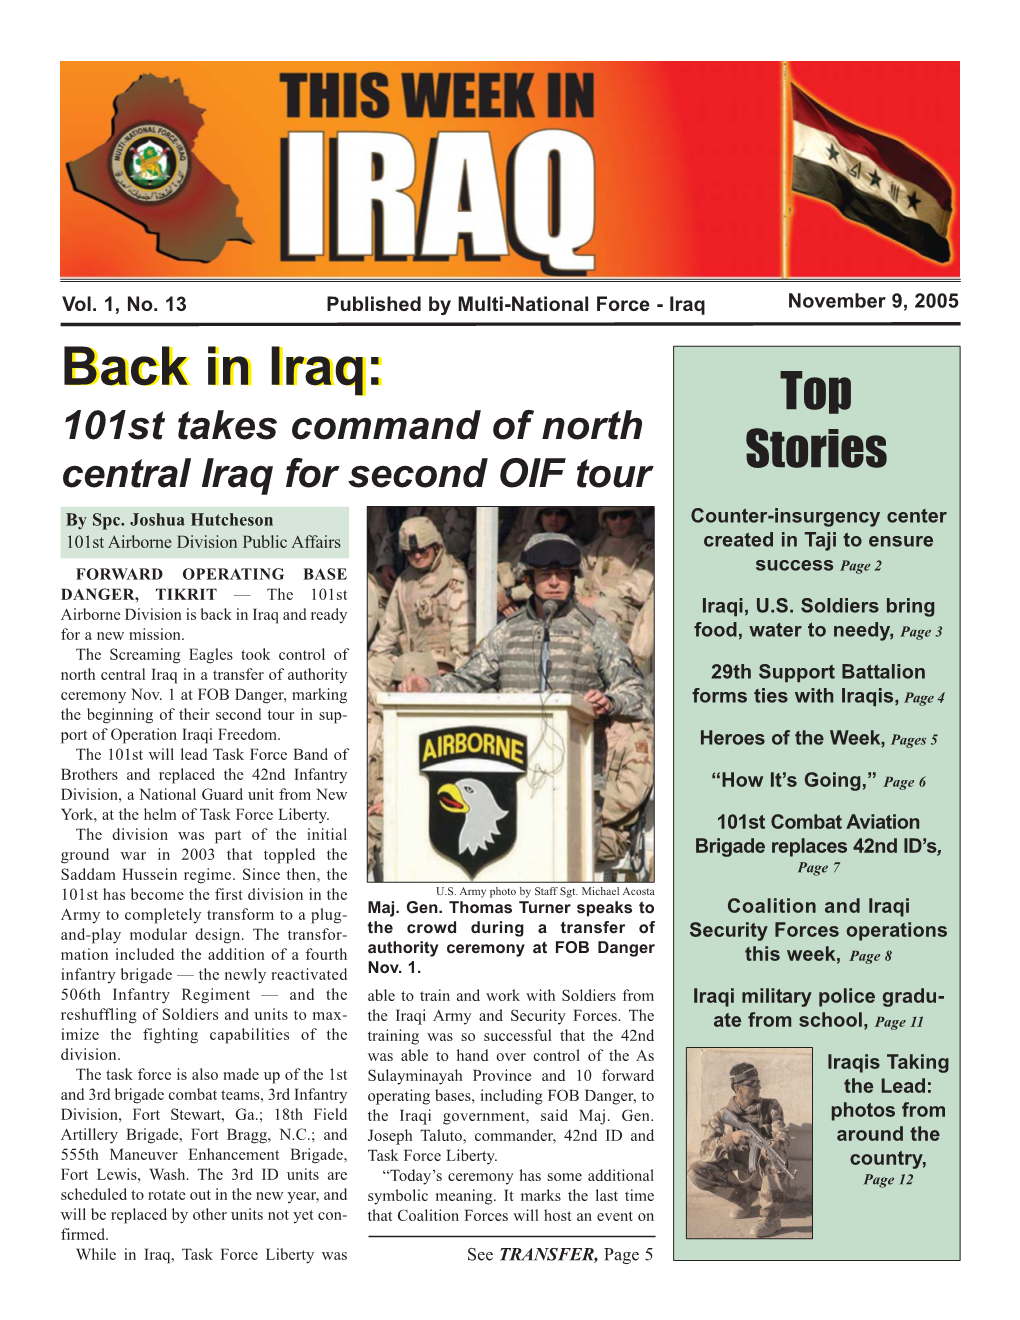 Back in Iraq and Ready Iraqi, U.S